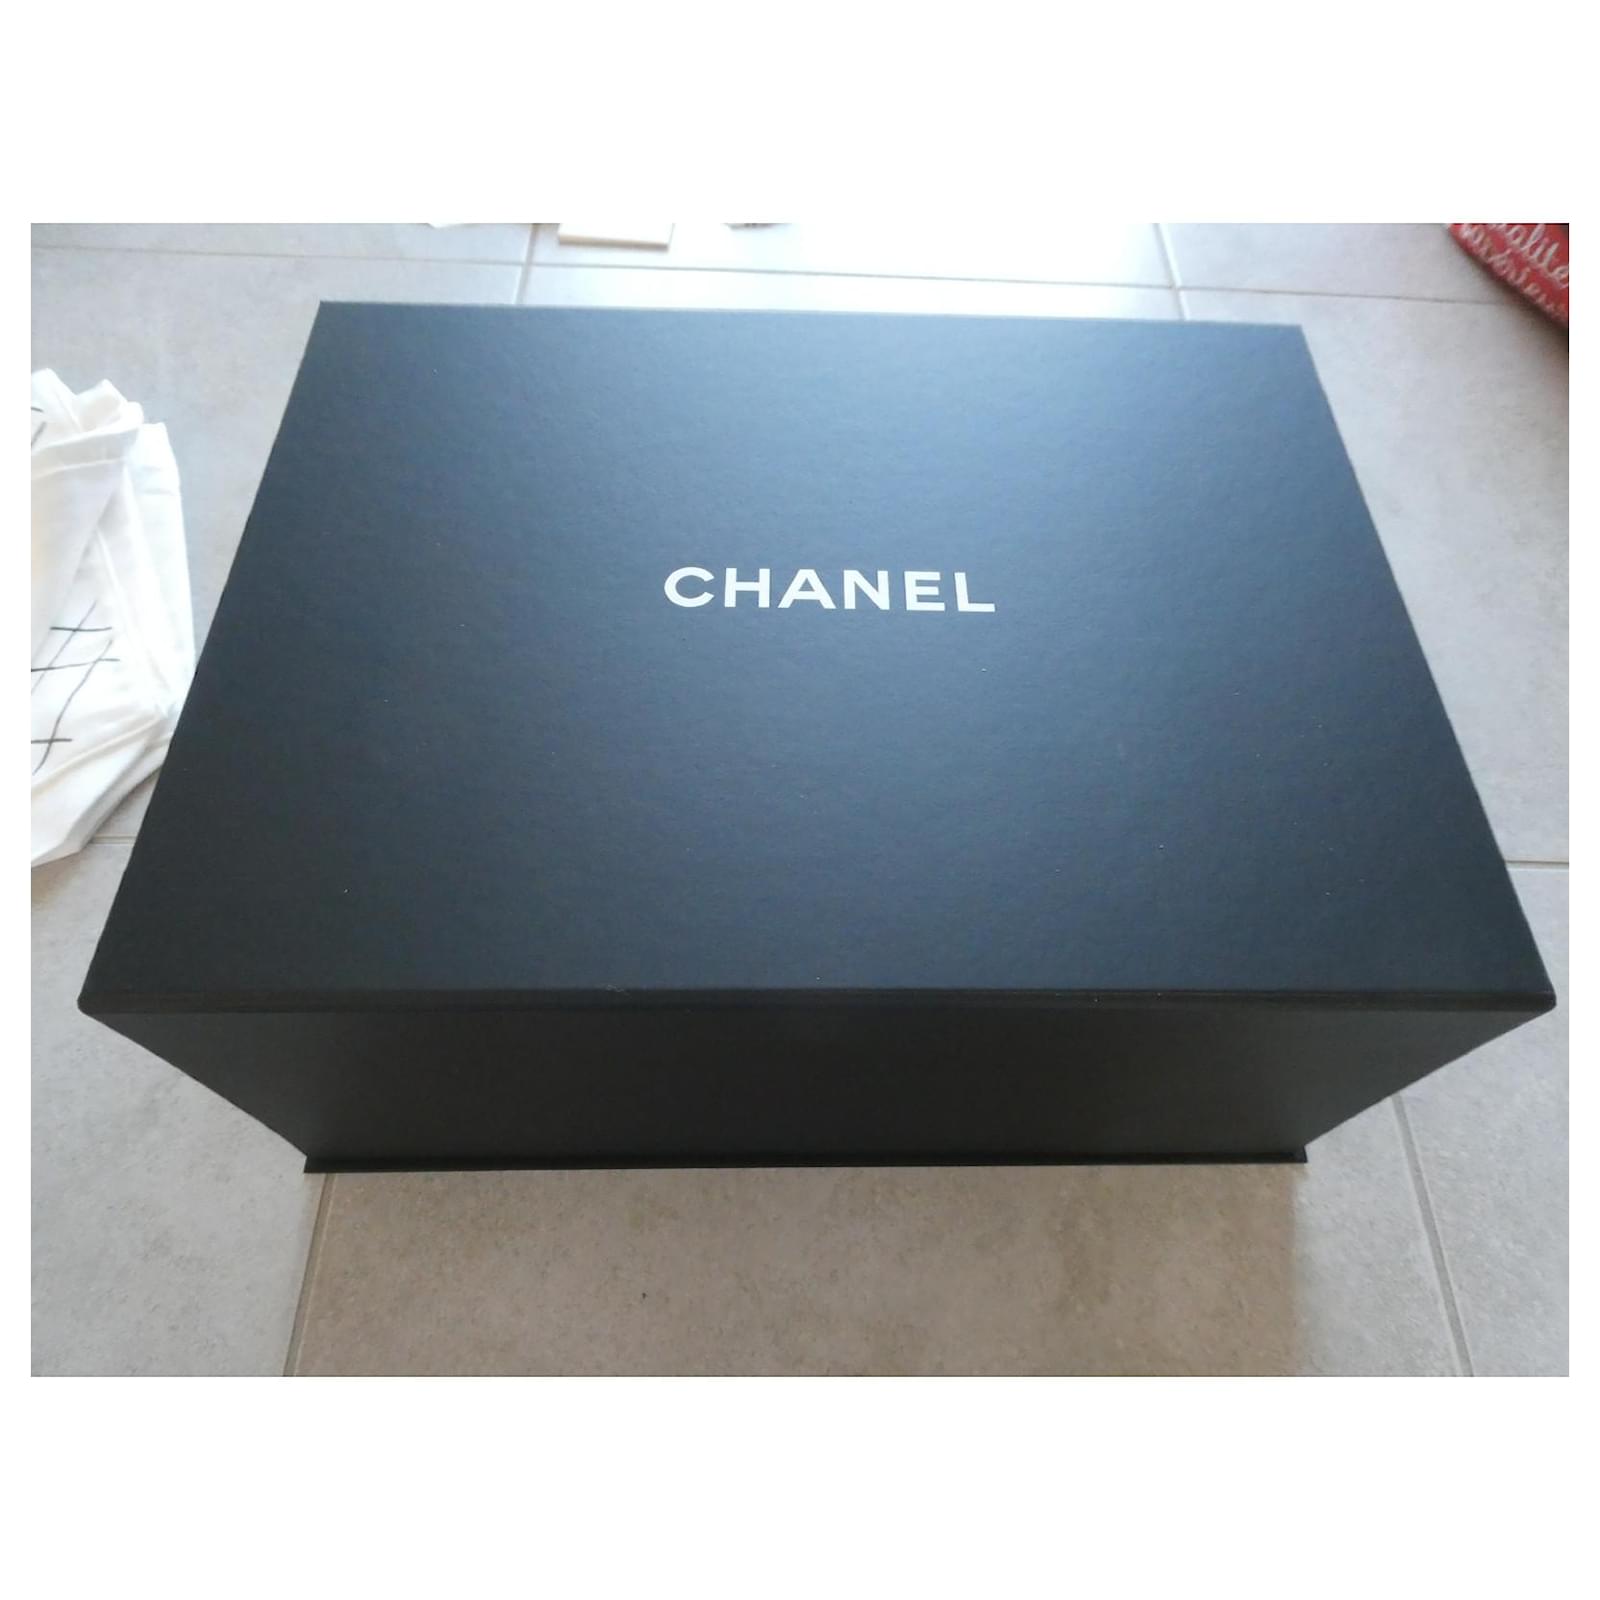 Empty authentic chanel box: - Gem